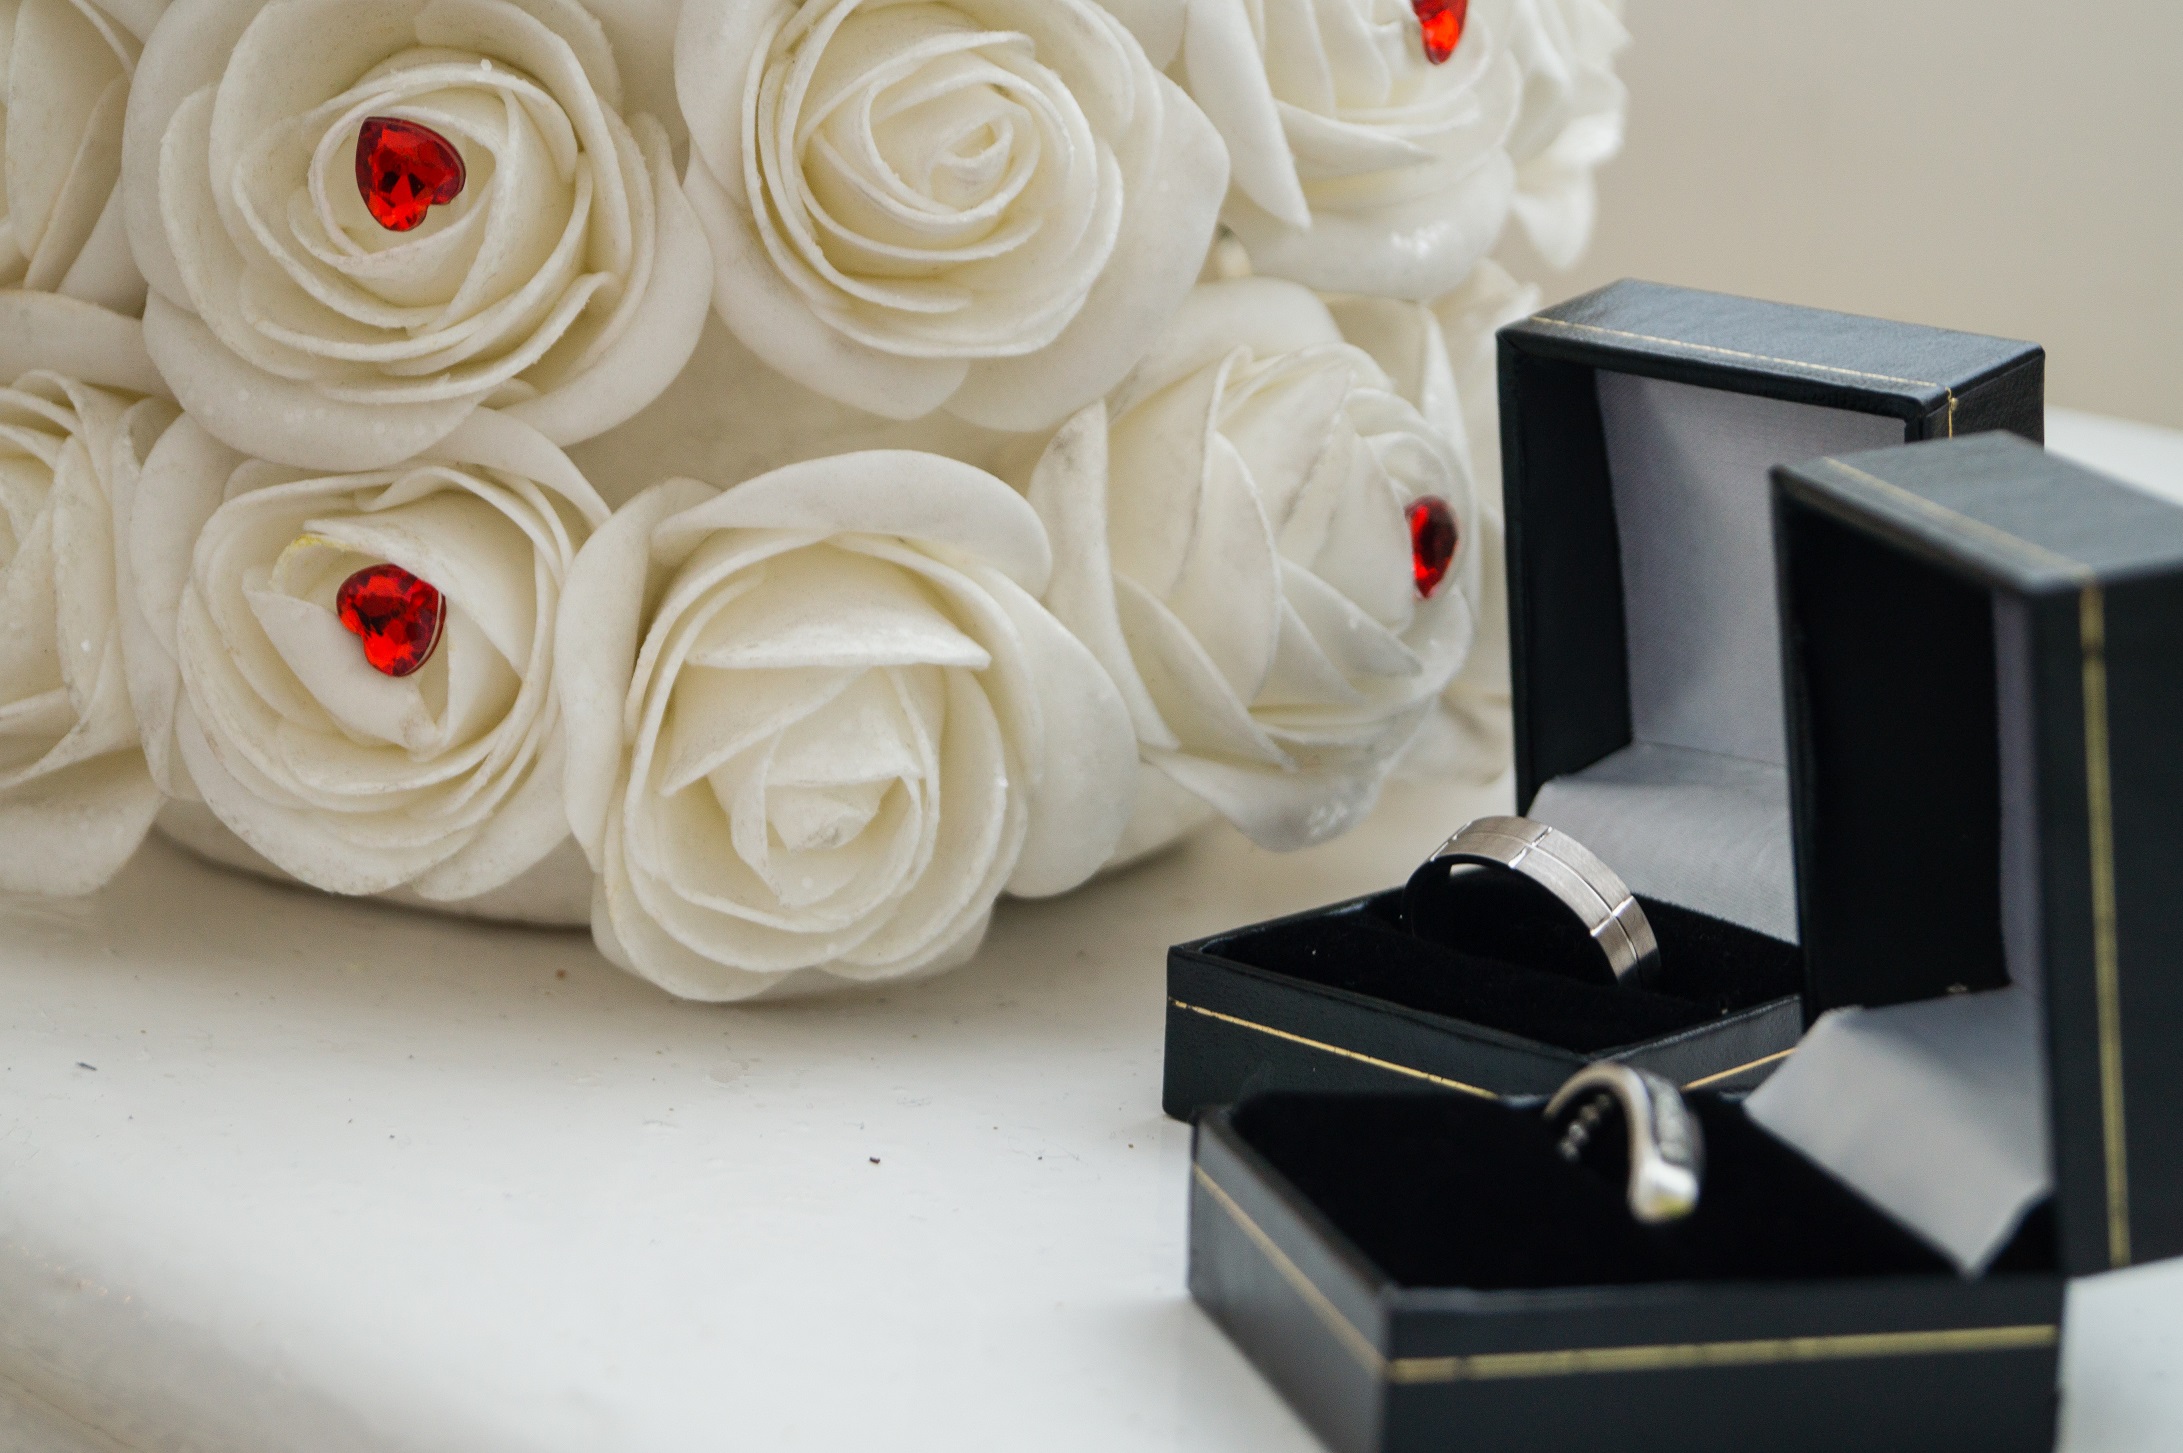 Hanbury Manor Wedding, Hertfordshire, wedding rings, white roses, red heart details, ring boxes